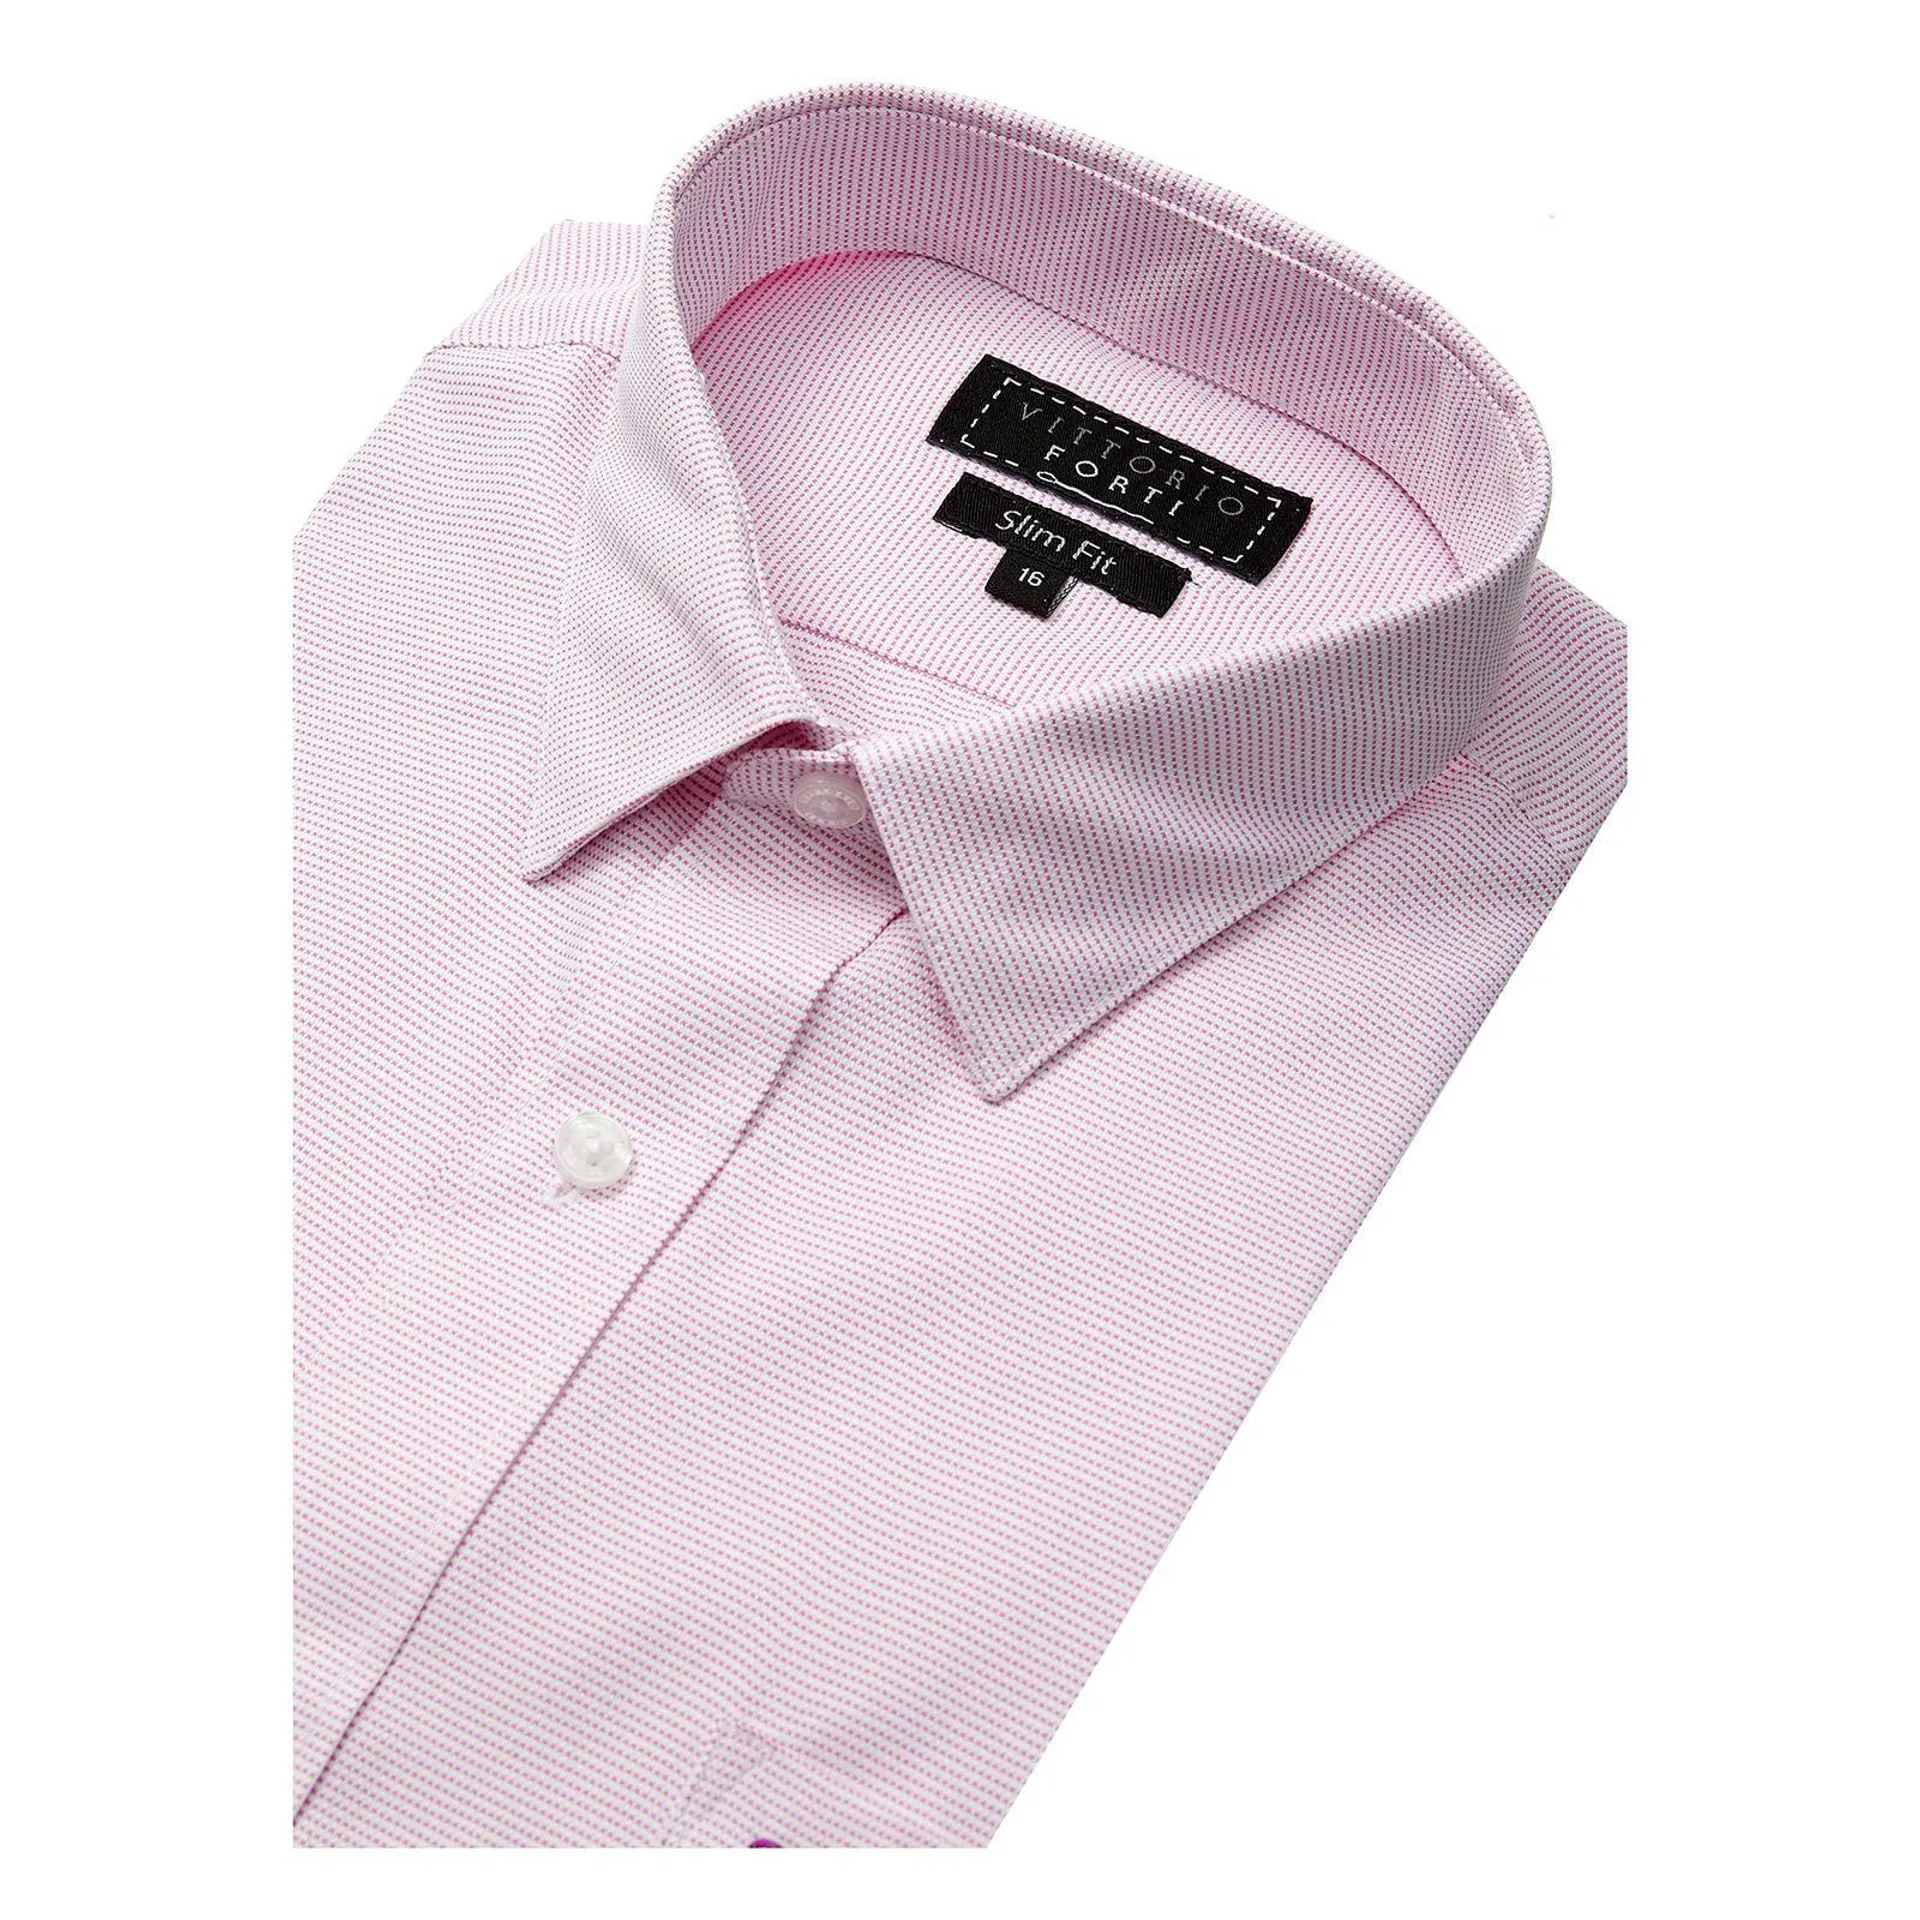 Camisa formal para hombre slim fit color rosa